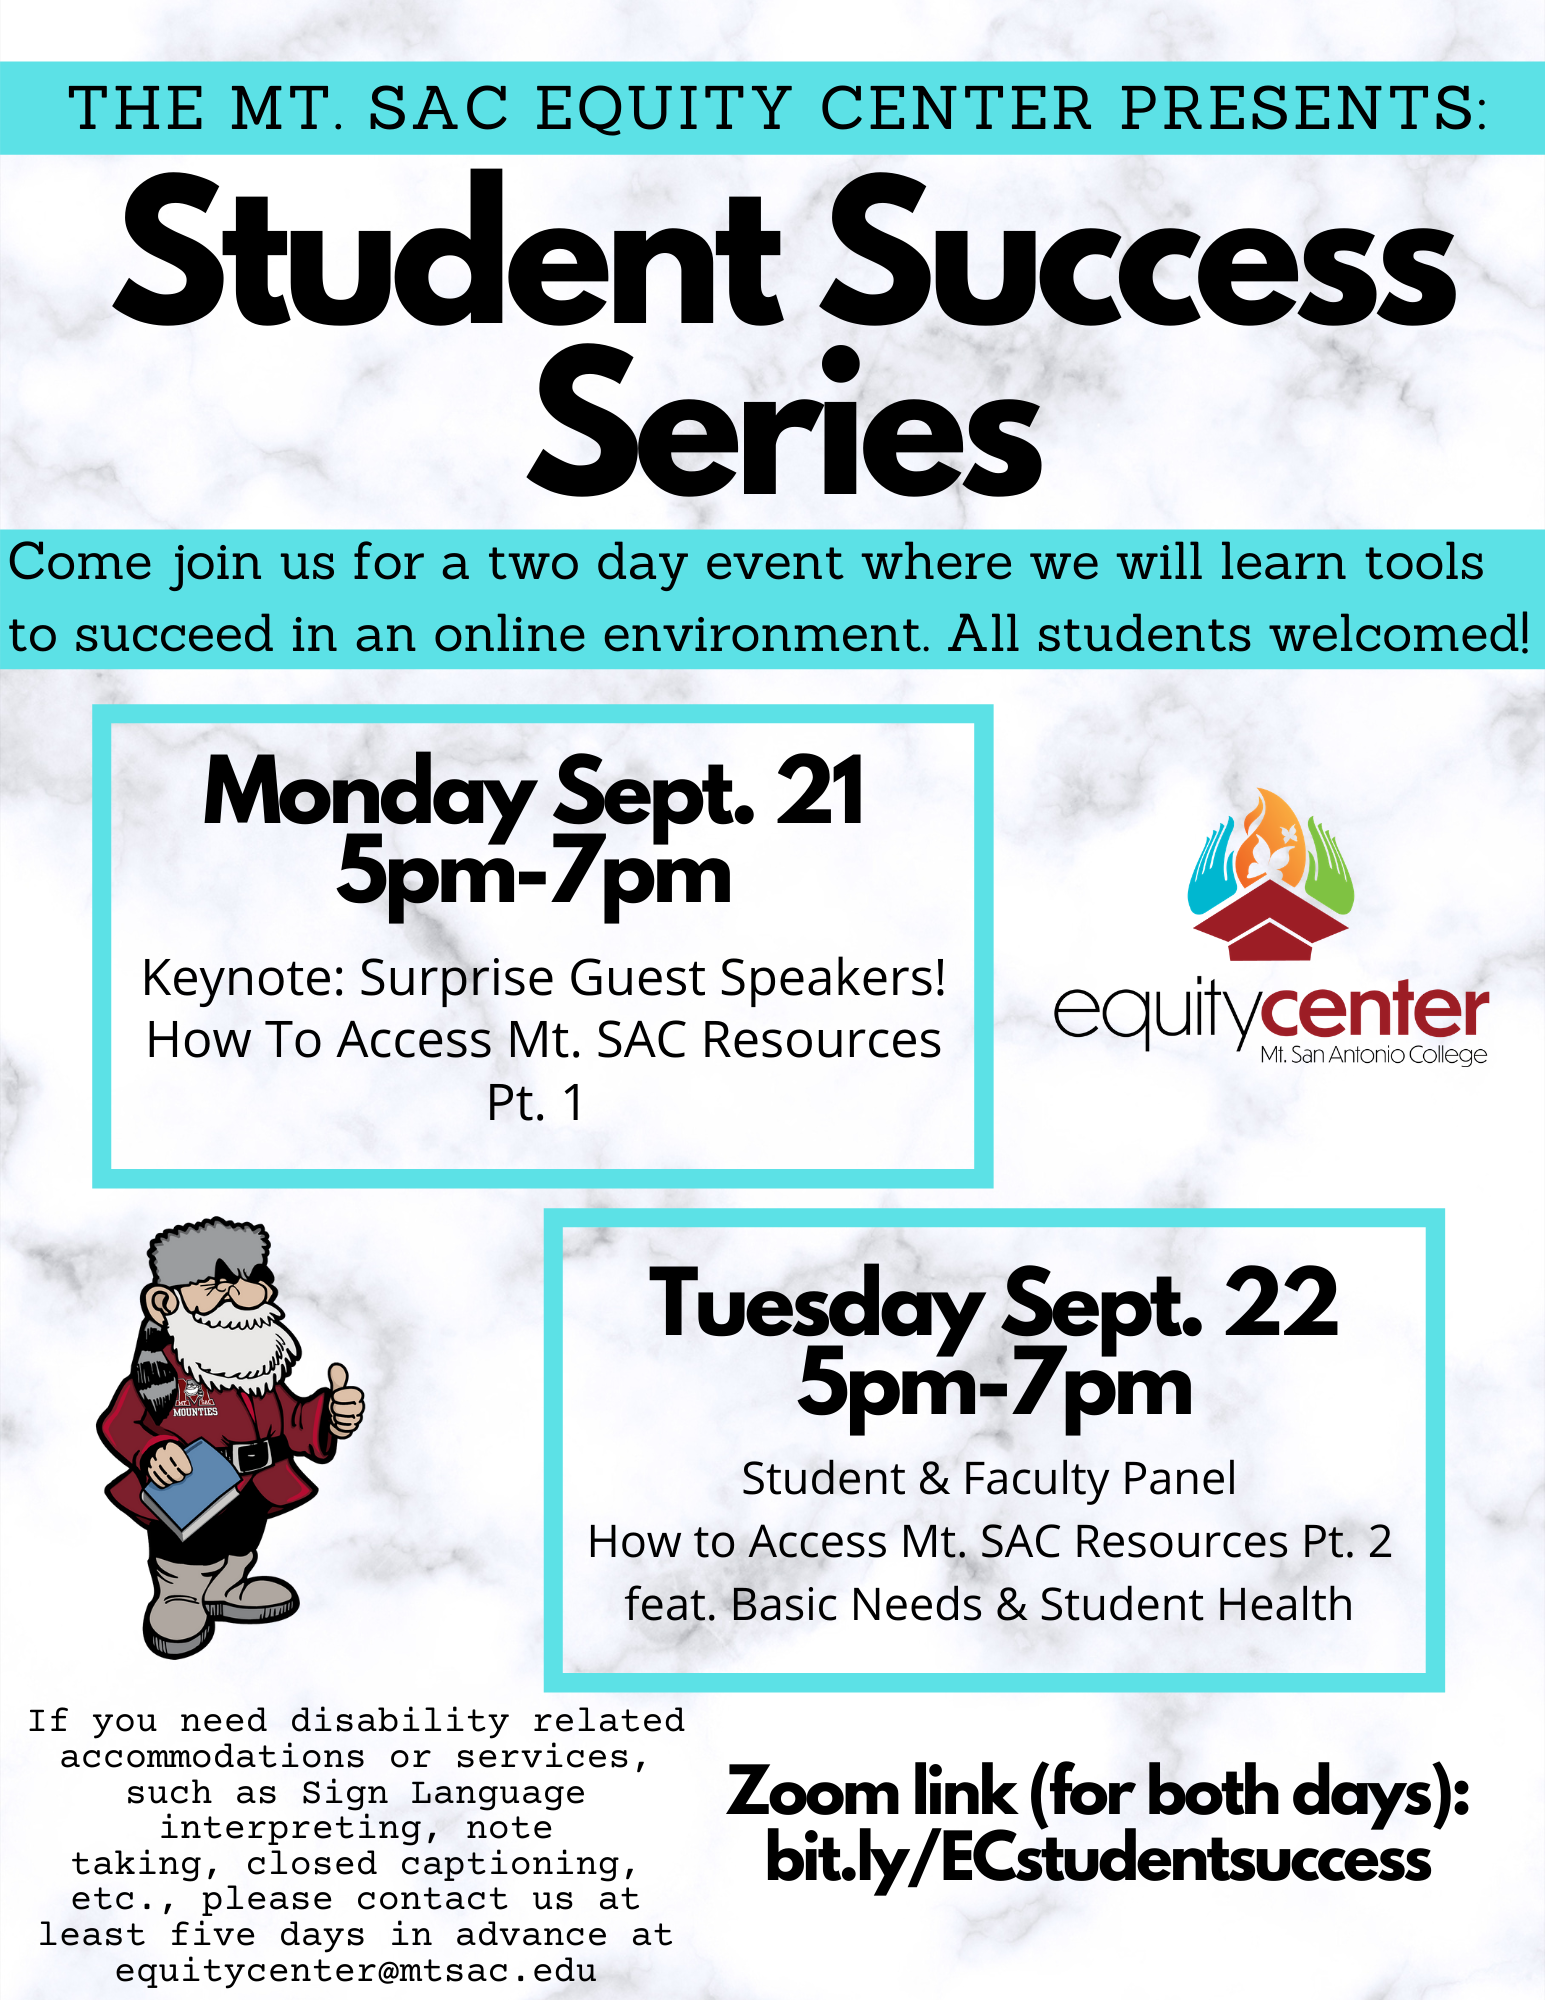 Student Success Series Event